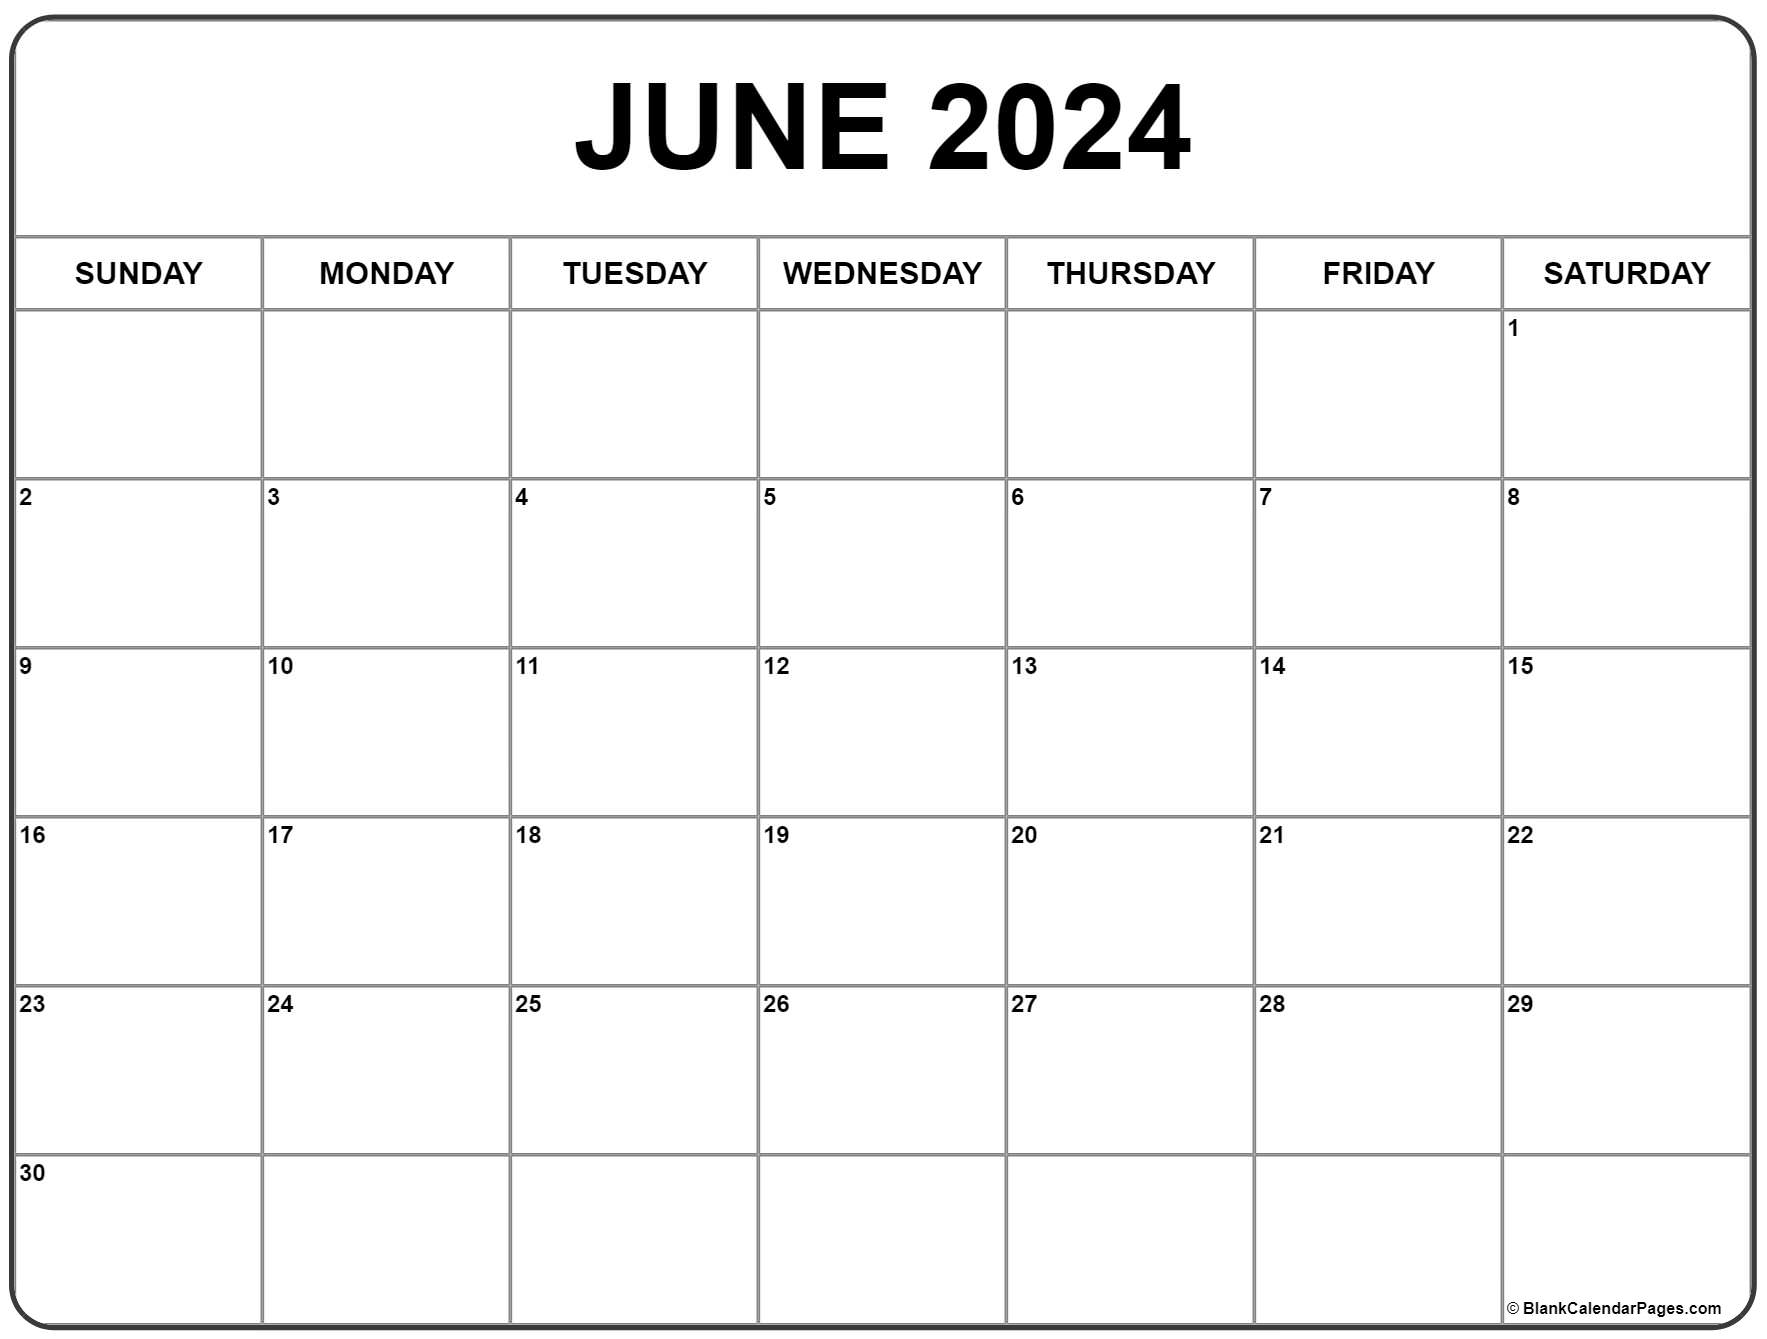 June 2024 Calendar | Free Printable Calendar for Free Printable Monthly Calendar June 2024